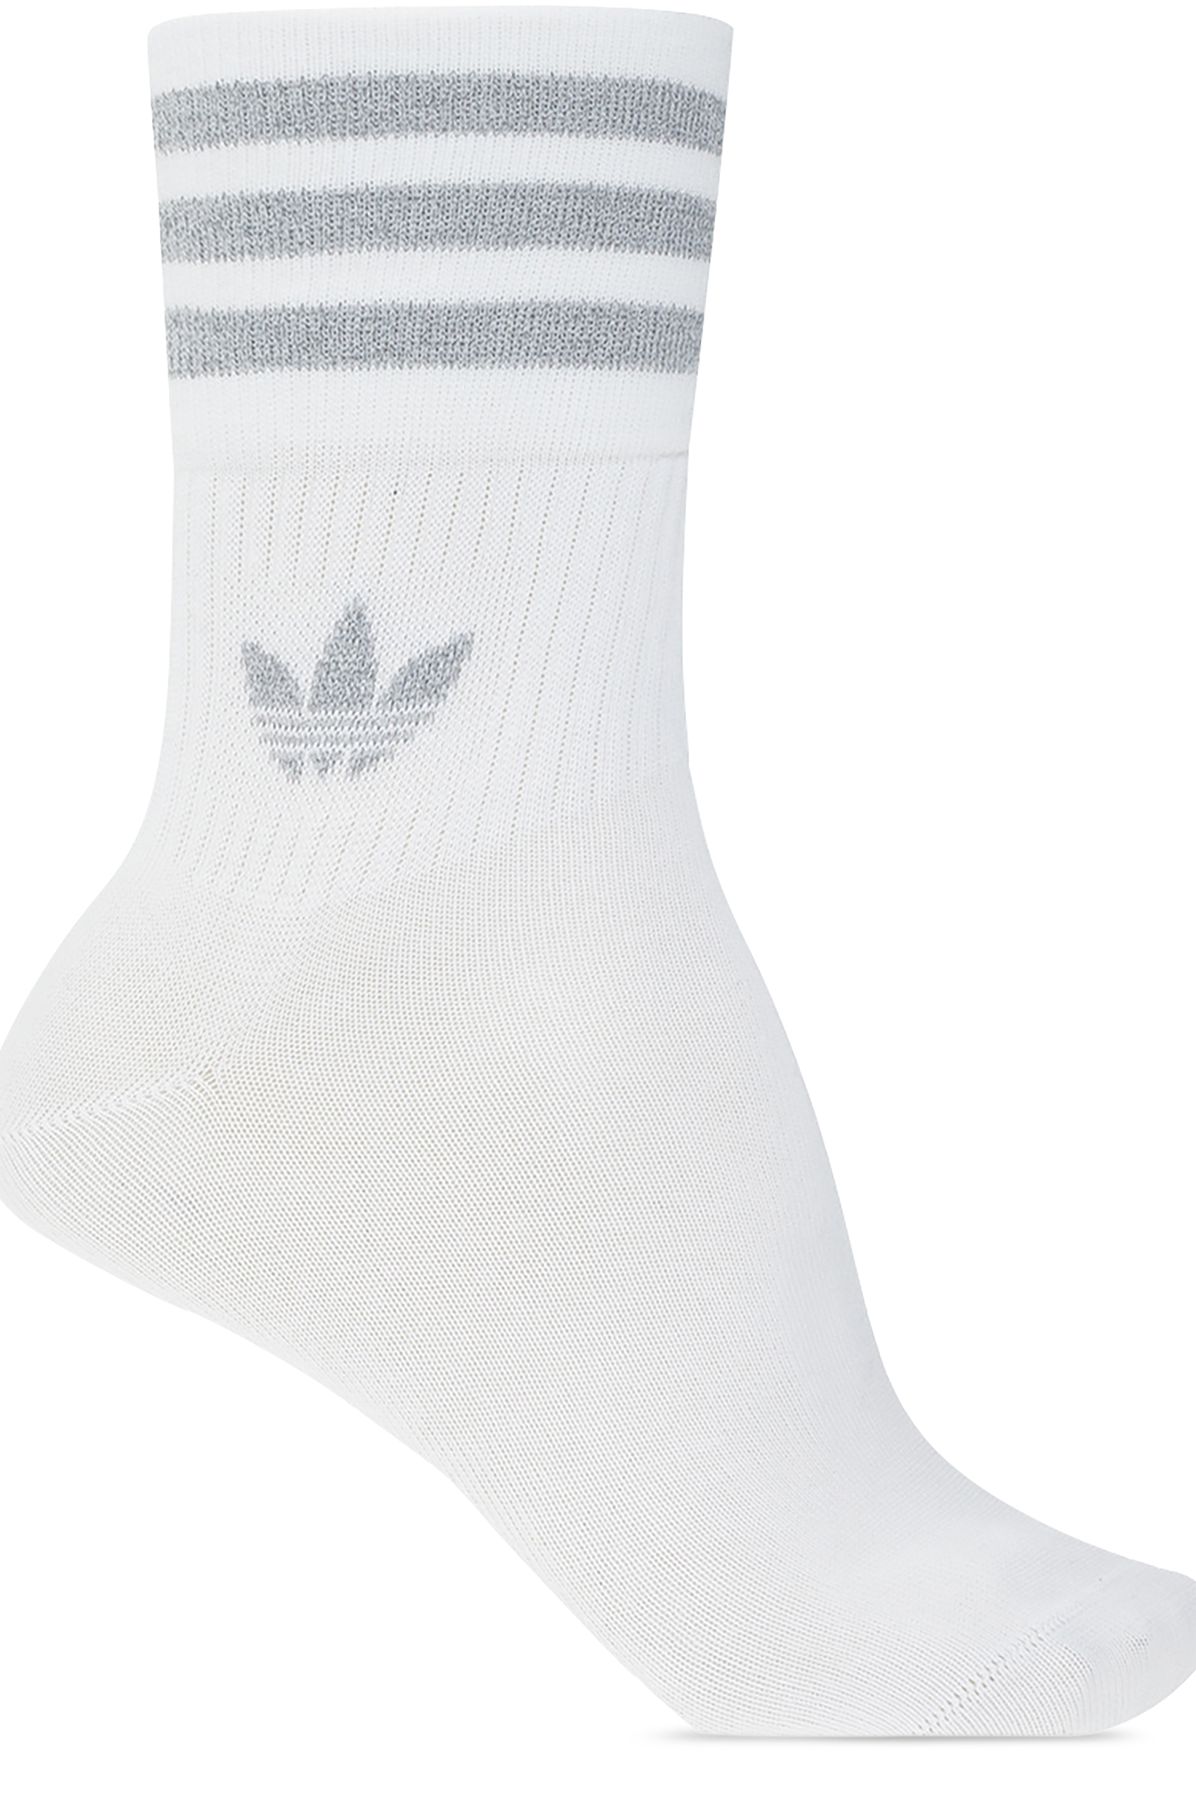 Adidas Originals Branded socks two-pack